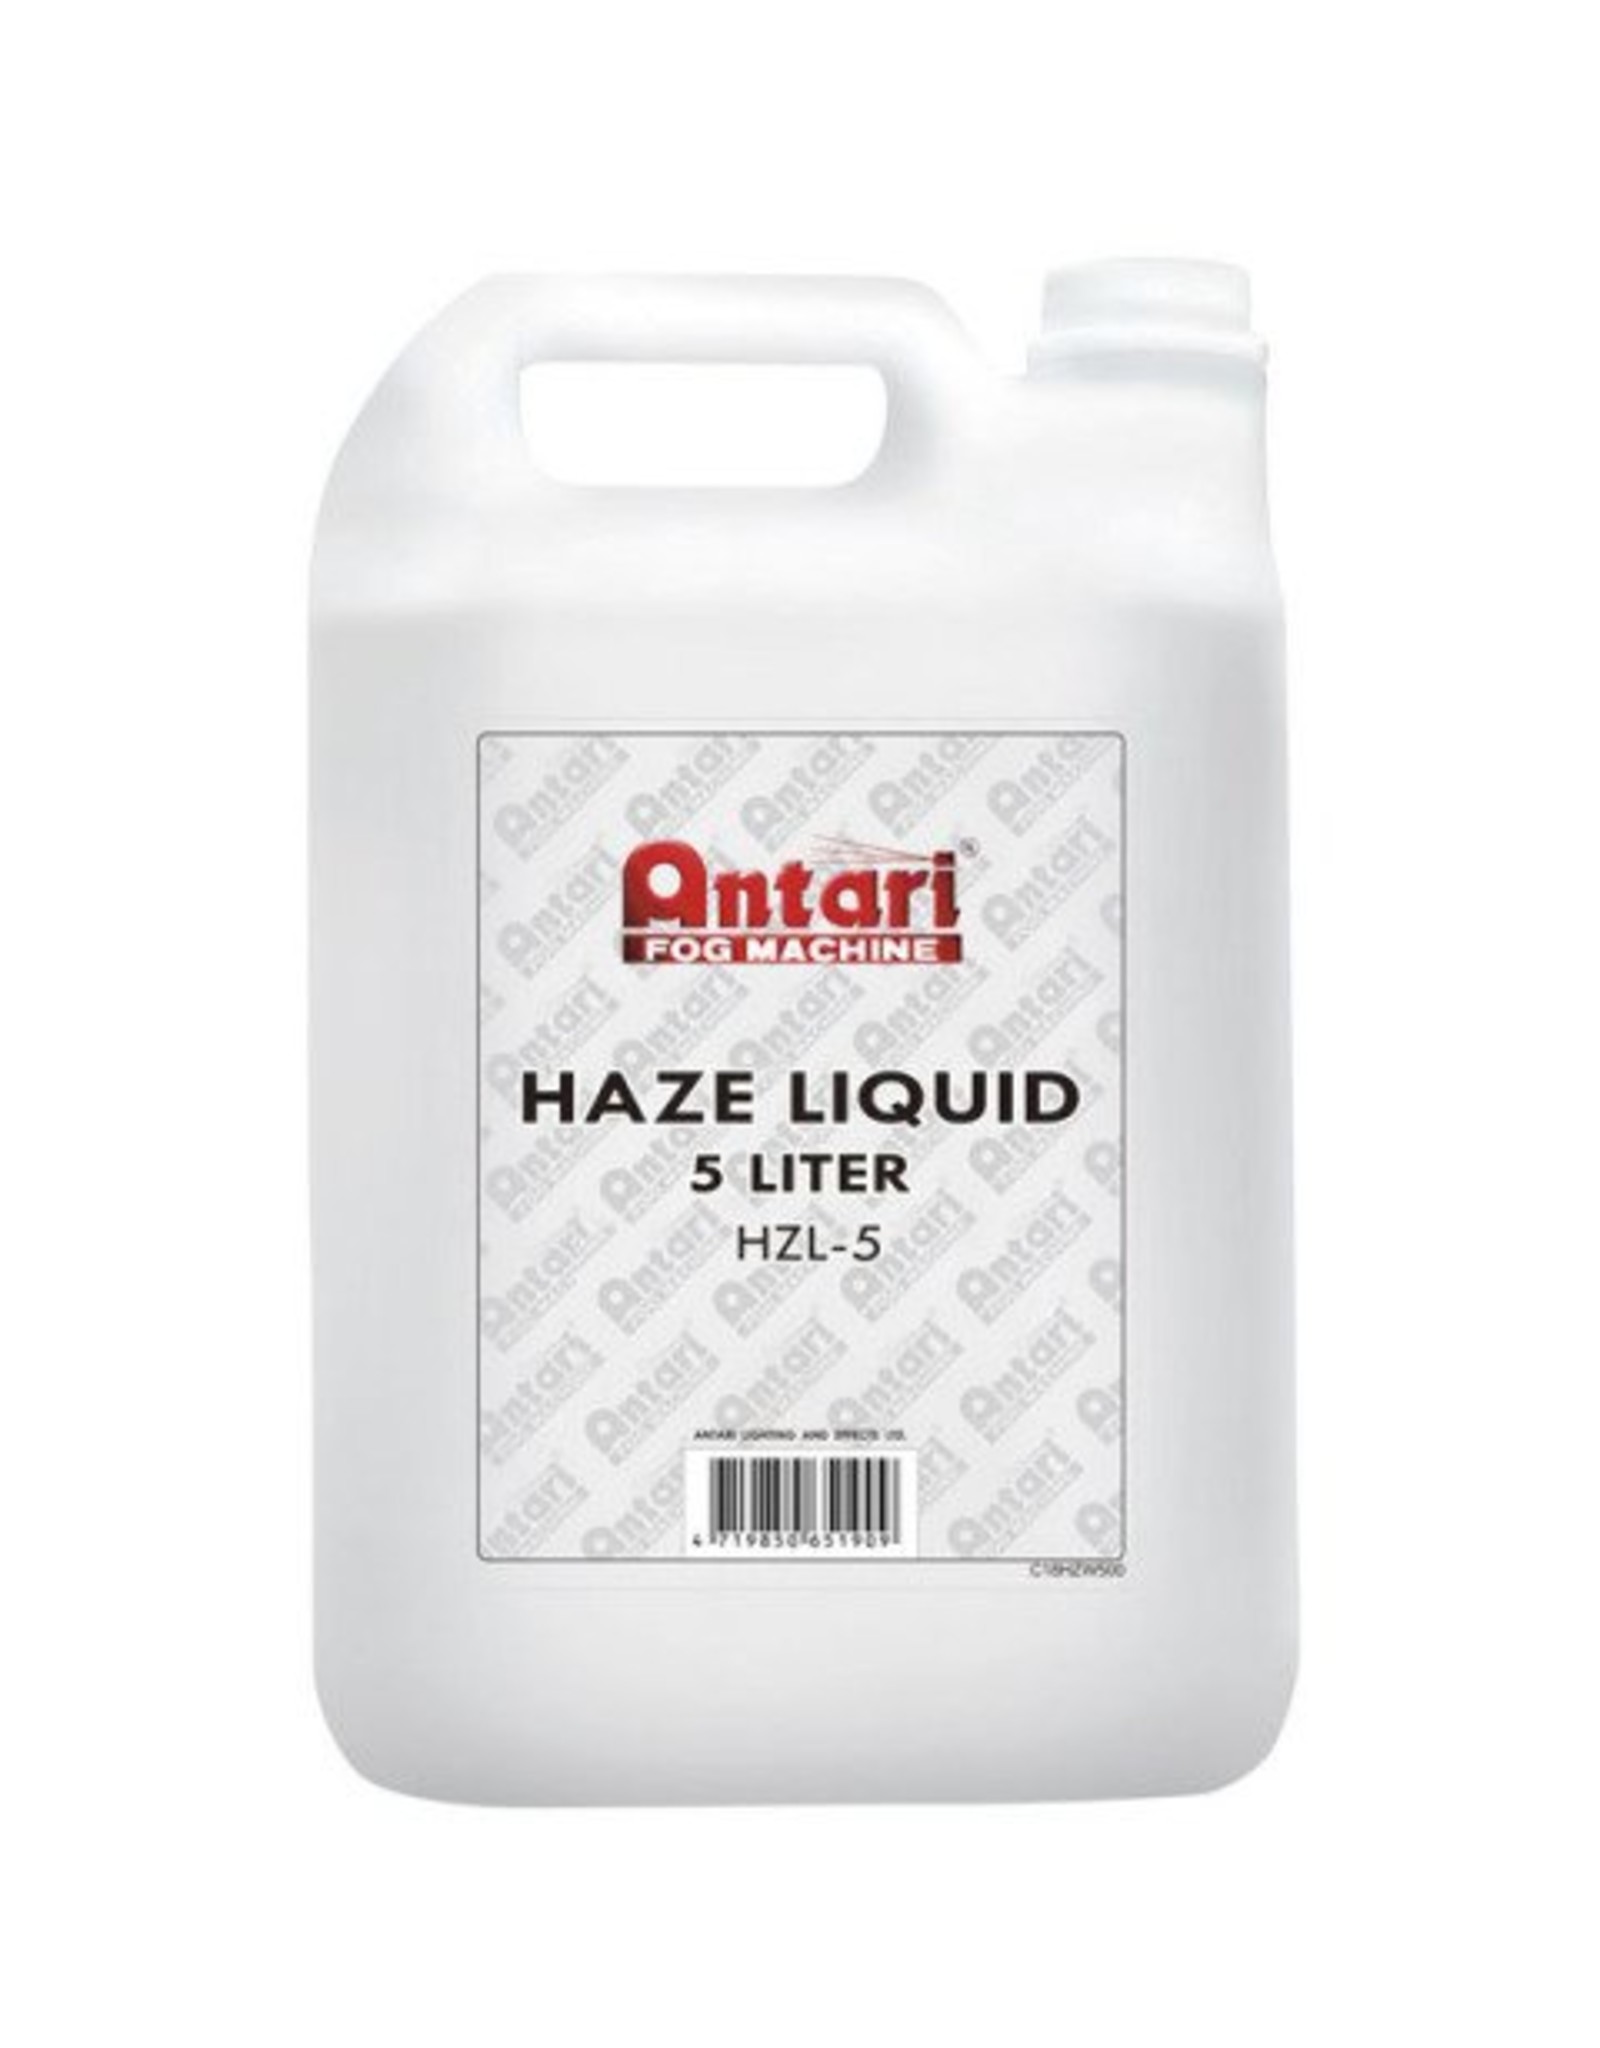 Antari Hazerfluid HZL-5 vloeistof 5 liter professioneel